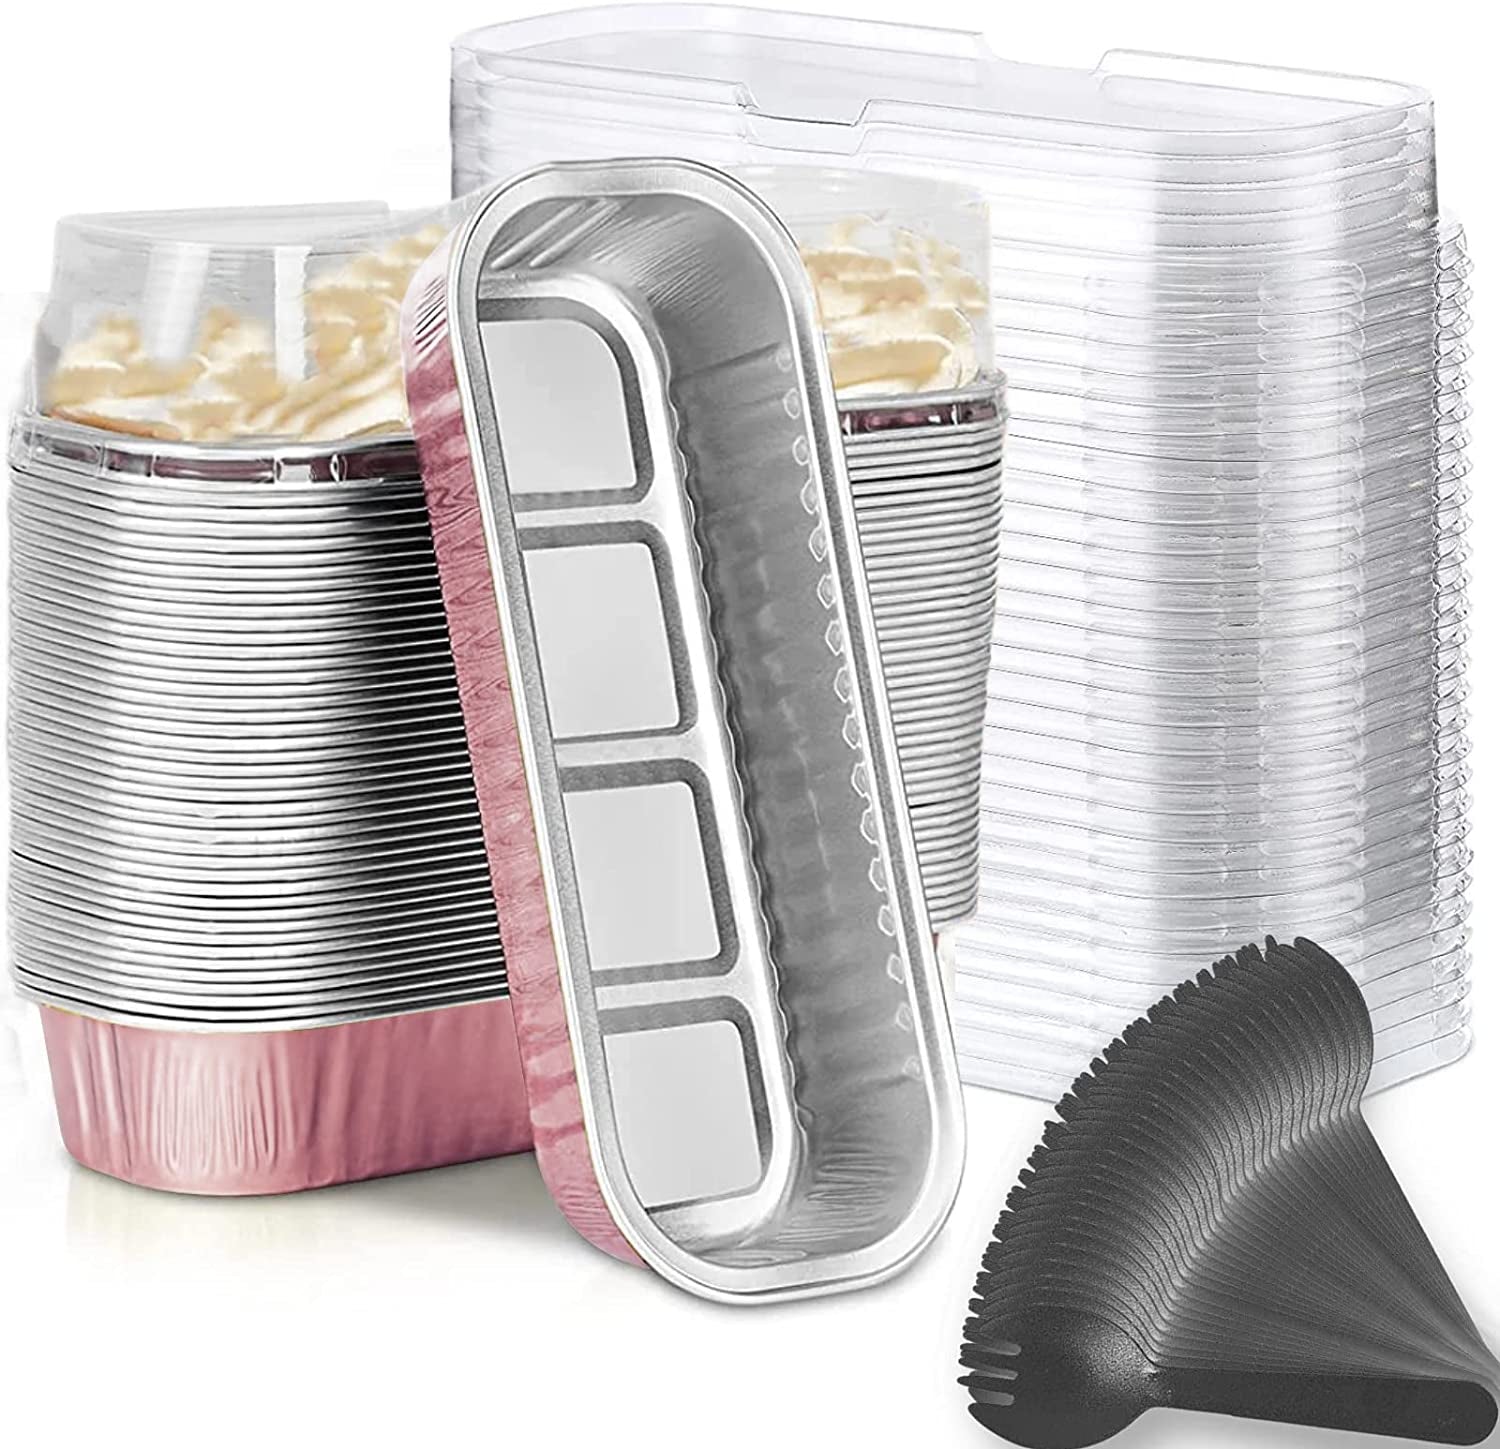 50 Pack Mini Loaf Baking Pans with Lids & Spoons - 6.8oz Aluminum Foil Rectangle